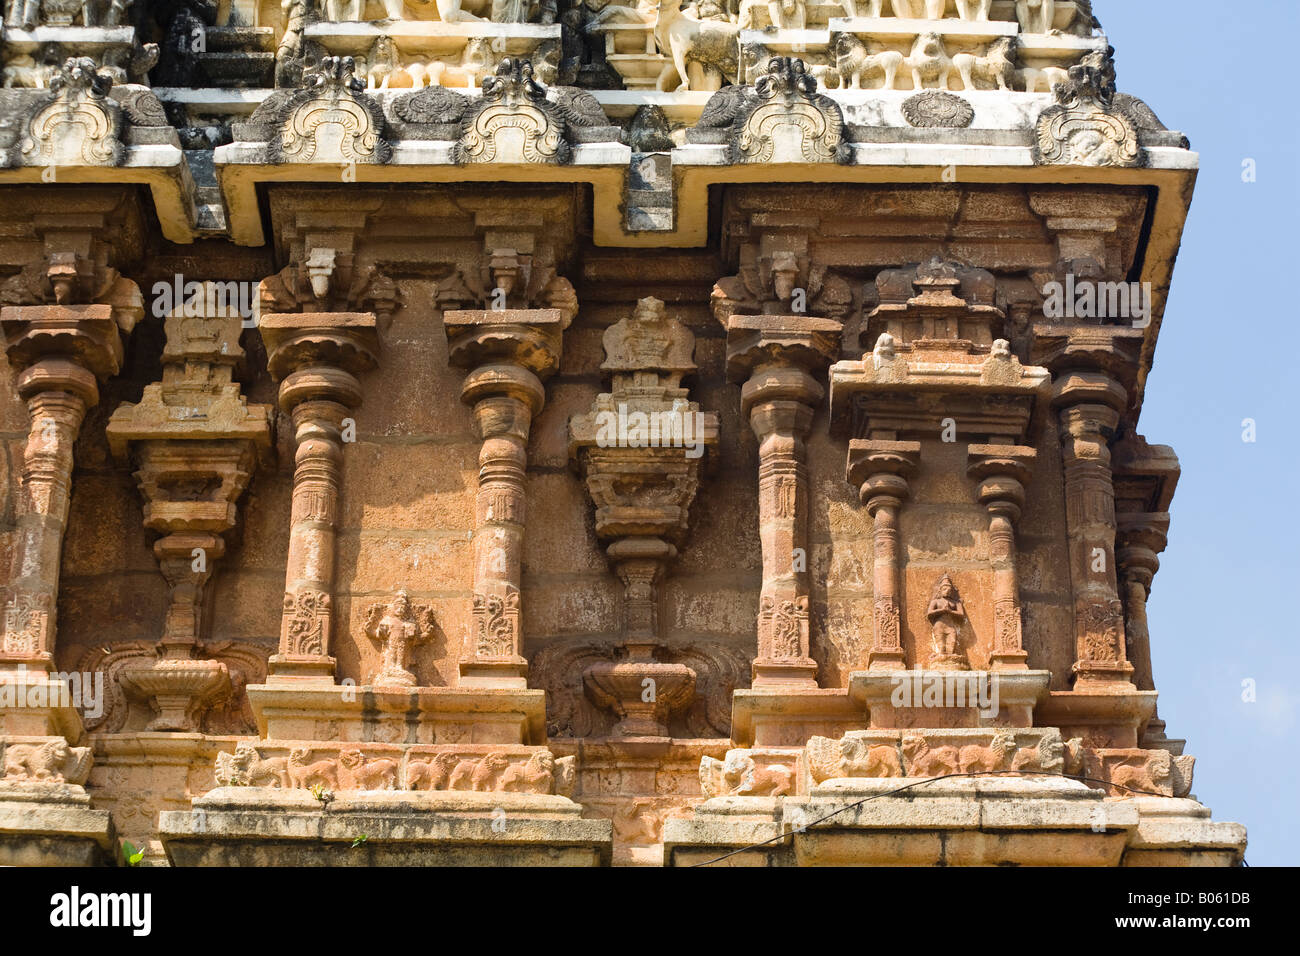 Carved columns and statues on a gopuram, Sree Padmanabhaswamy Temple, Trivandrum, Kerala, India Stock Photo